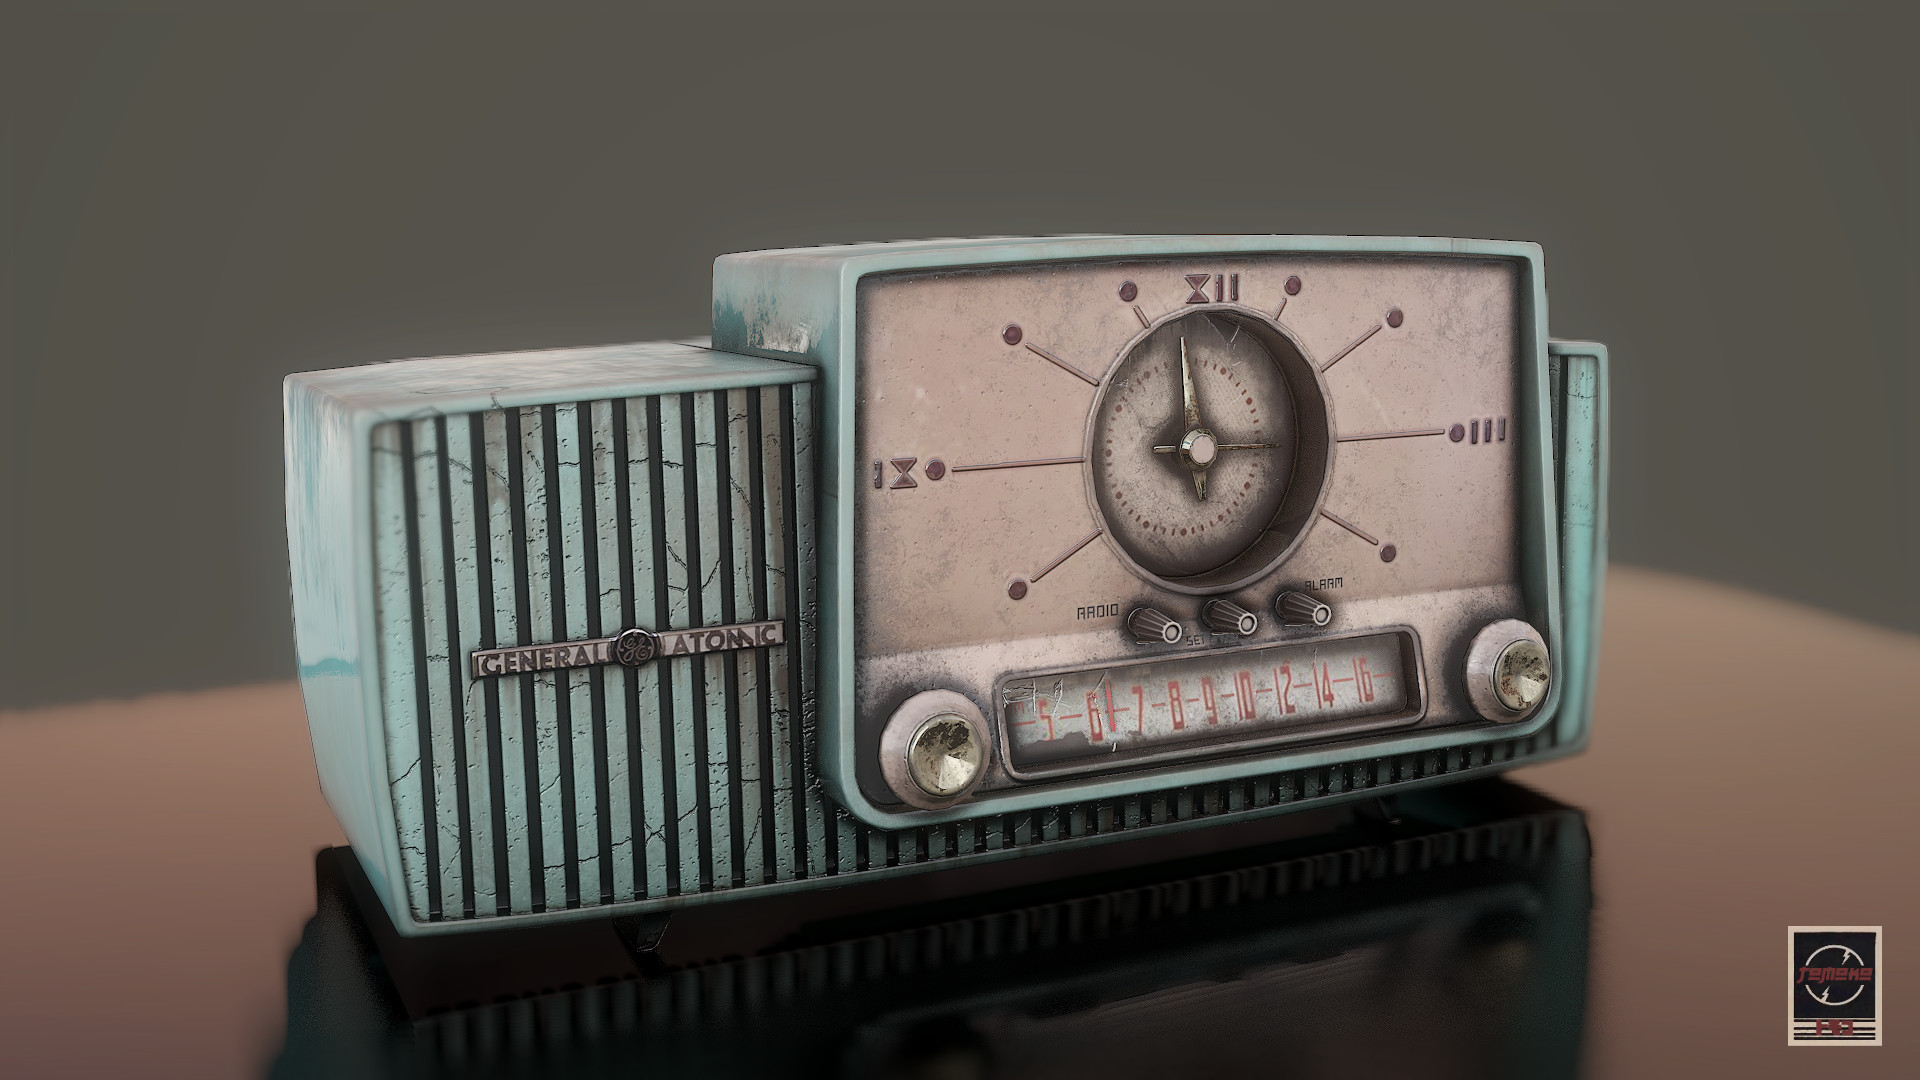 Fallout 2 – Style's Rebel Radio